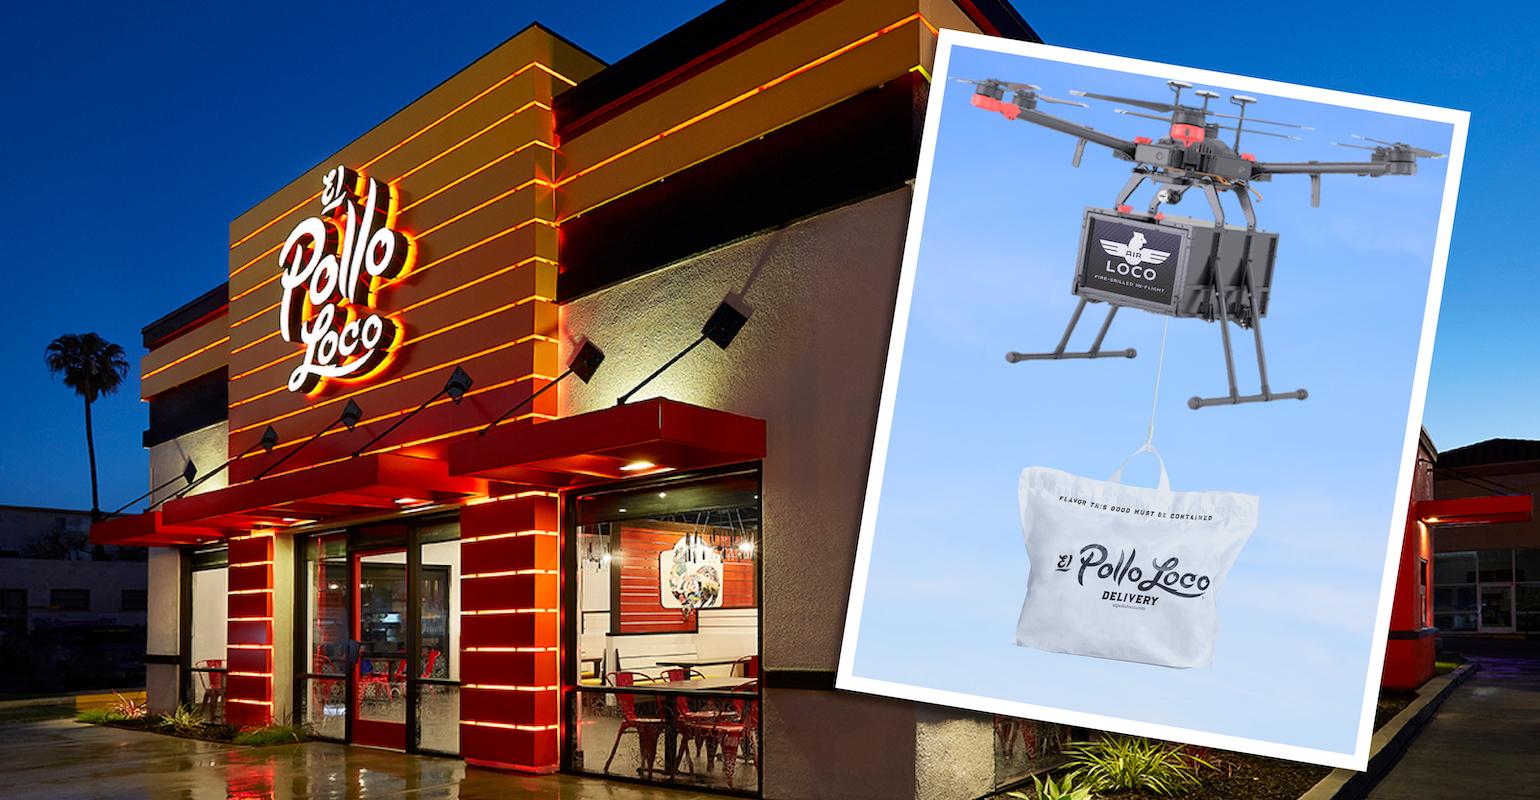 El Pollo Loco will test delivery via drone | Nation's Restaurant News